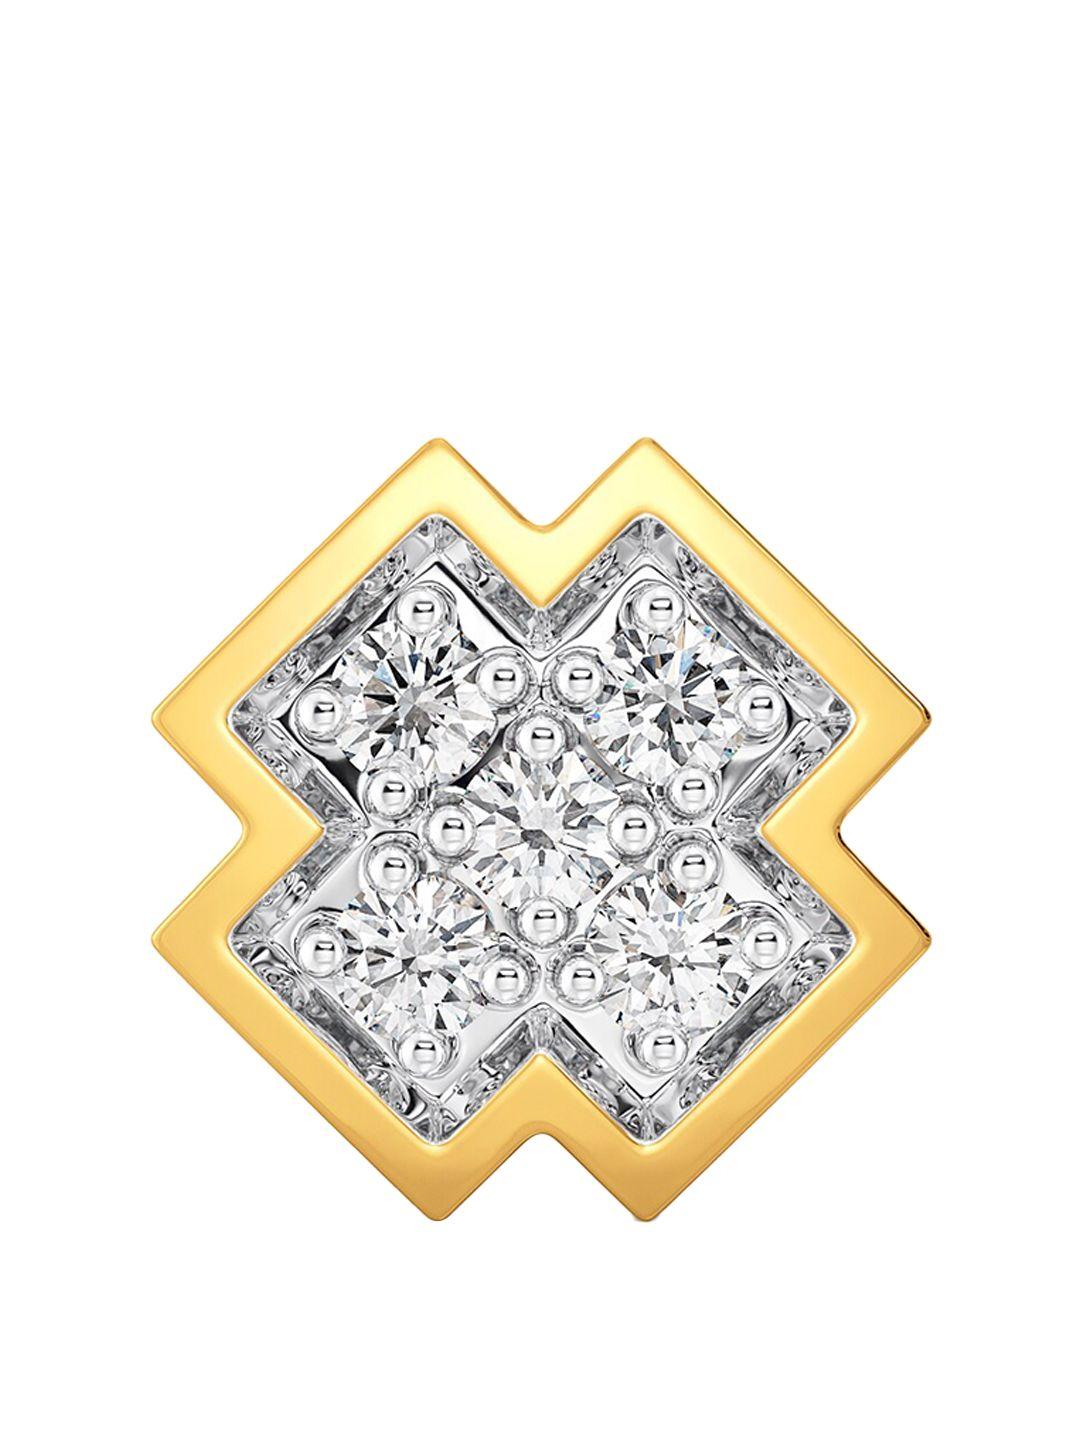 melorra 18kt gold rhodium-plated cross contours design diamond nose pin